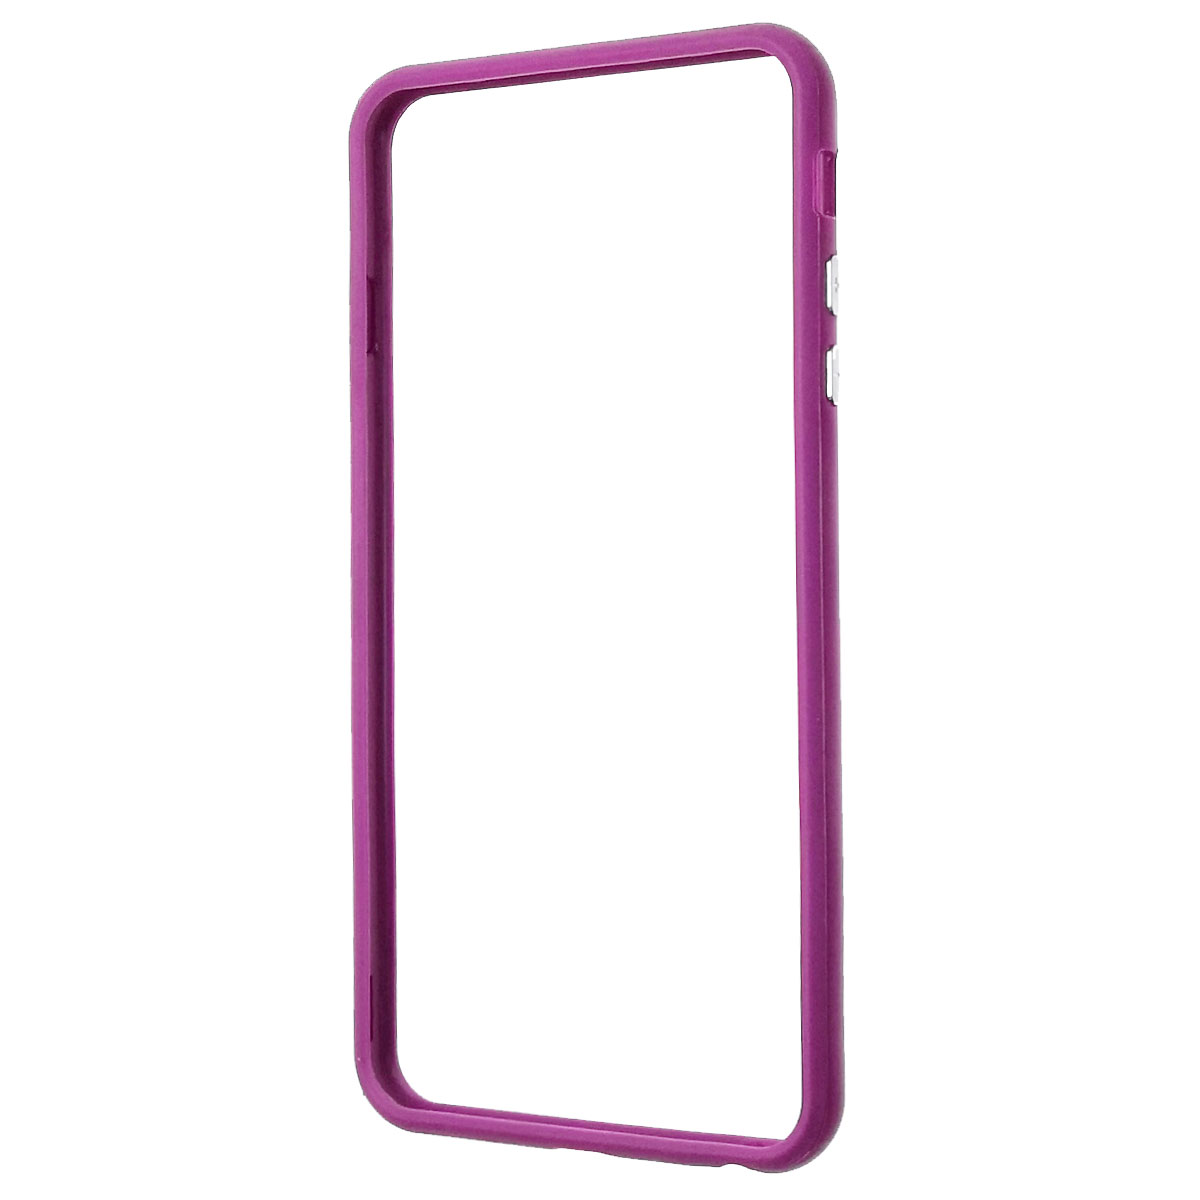 Бампер для APPLE iPhone 6 Plus, iPhone 6S Plus, силикон, пластик, цвет фиолетовый